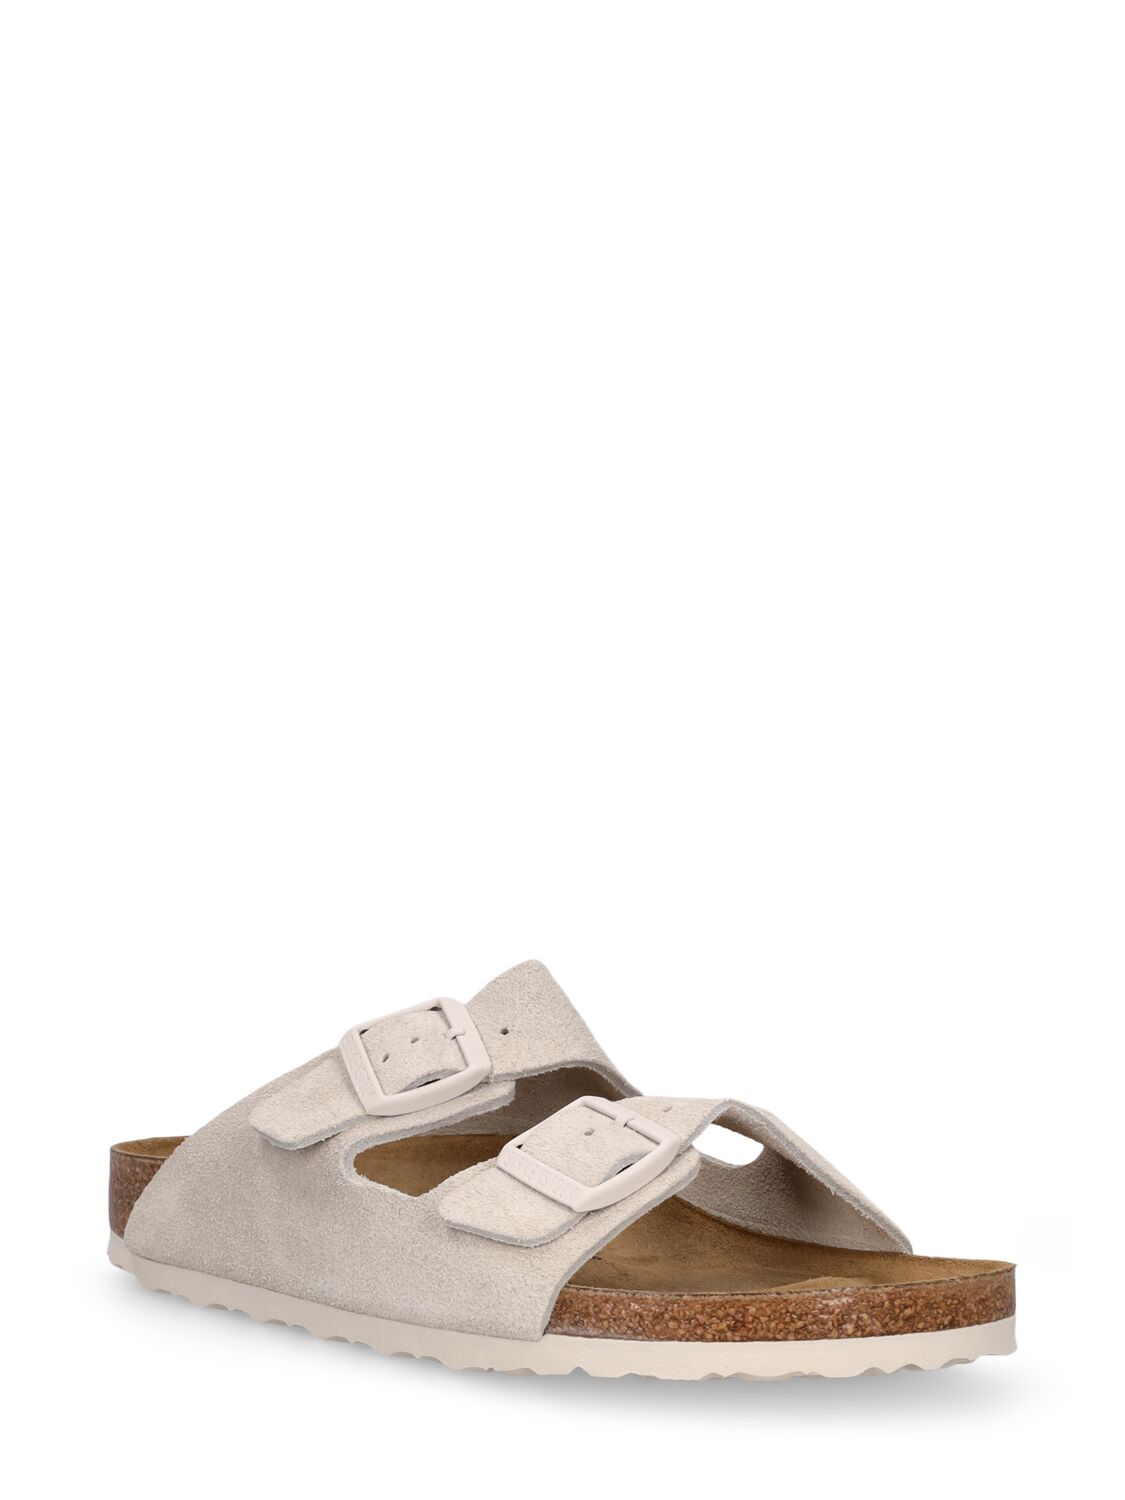 Shop Birkenstock Arizona Suede Sandals In White,beige